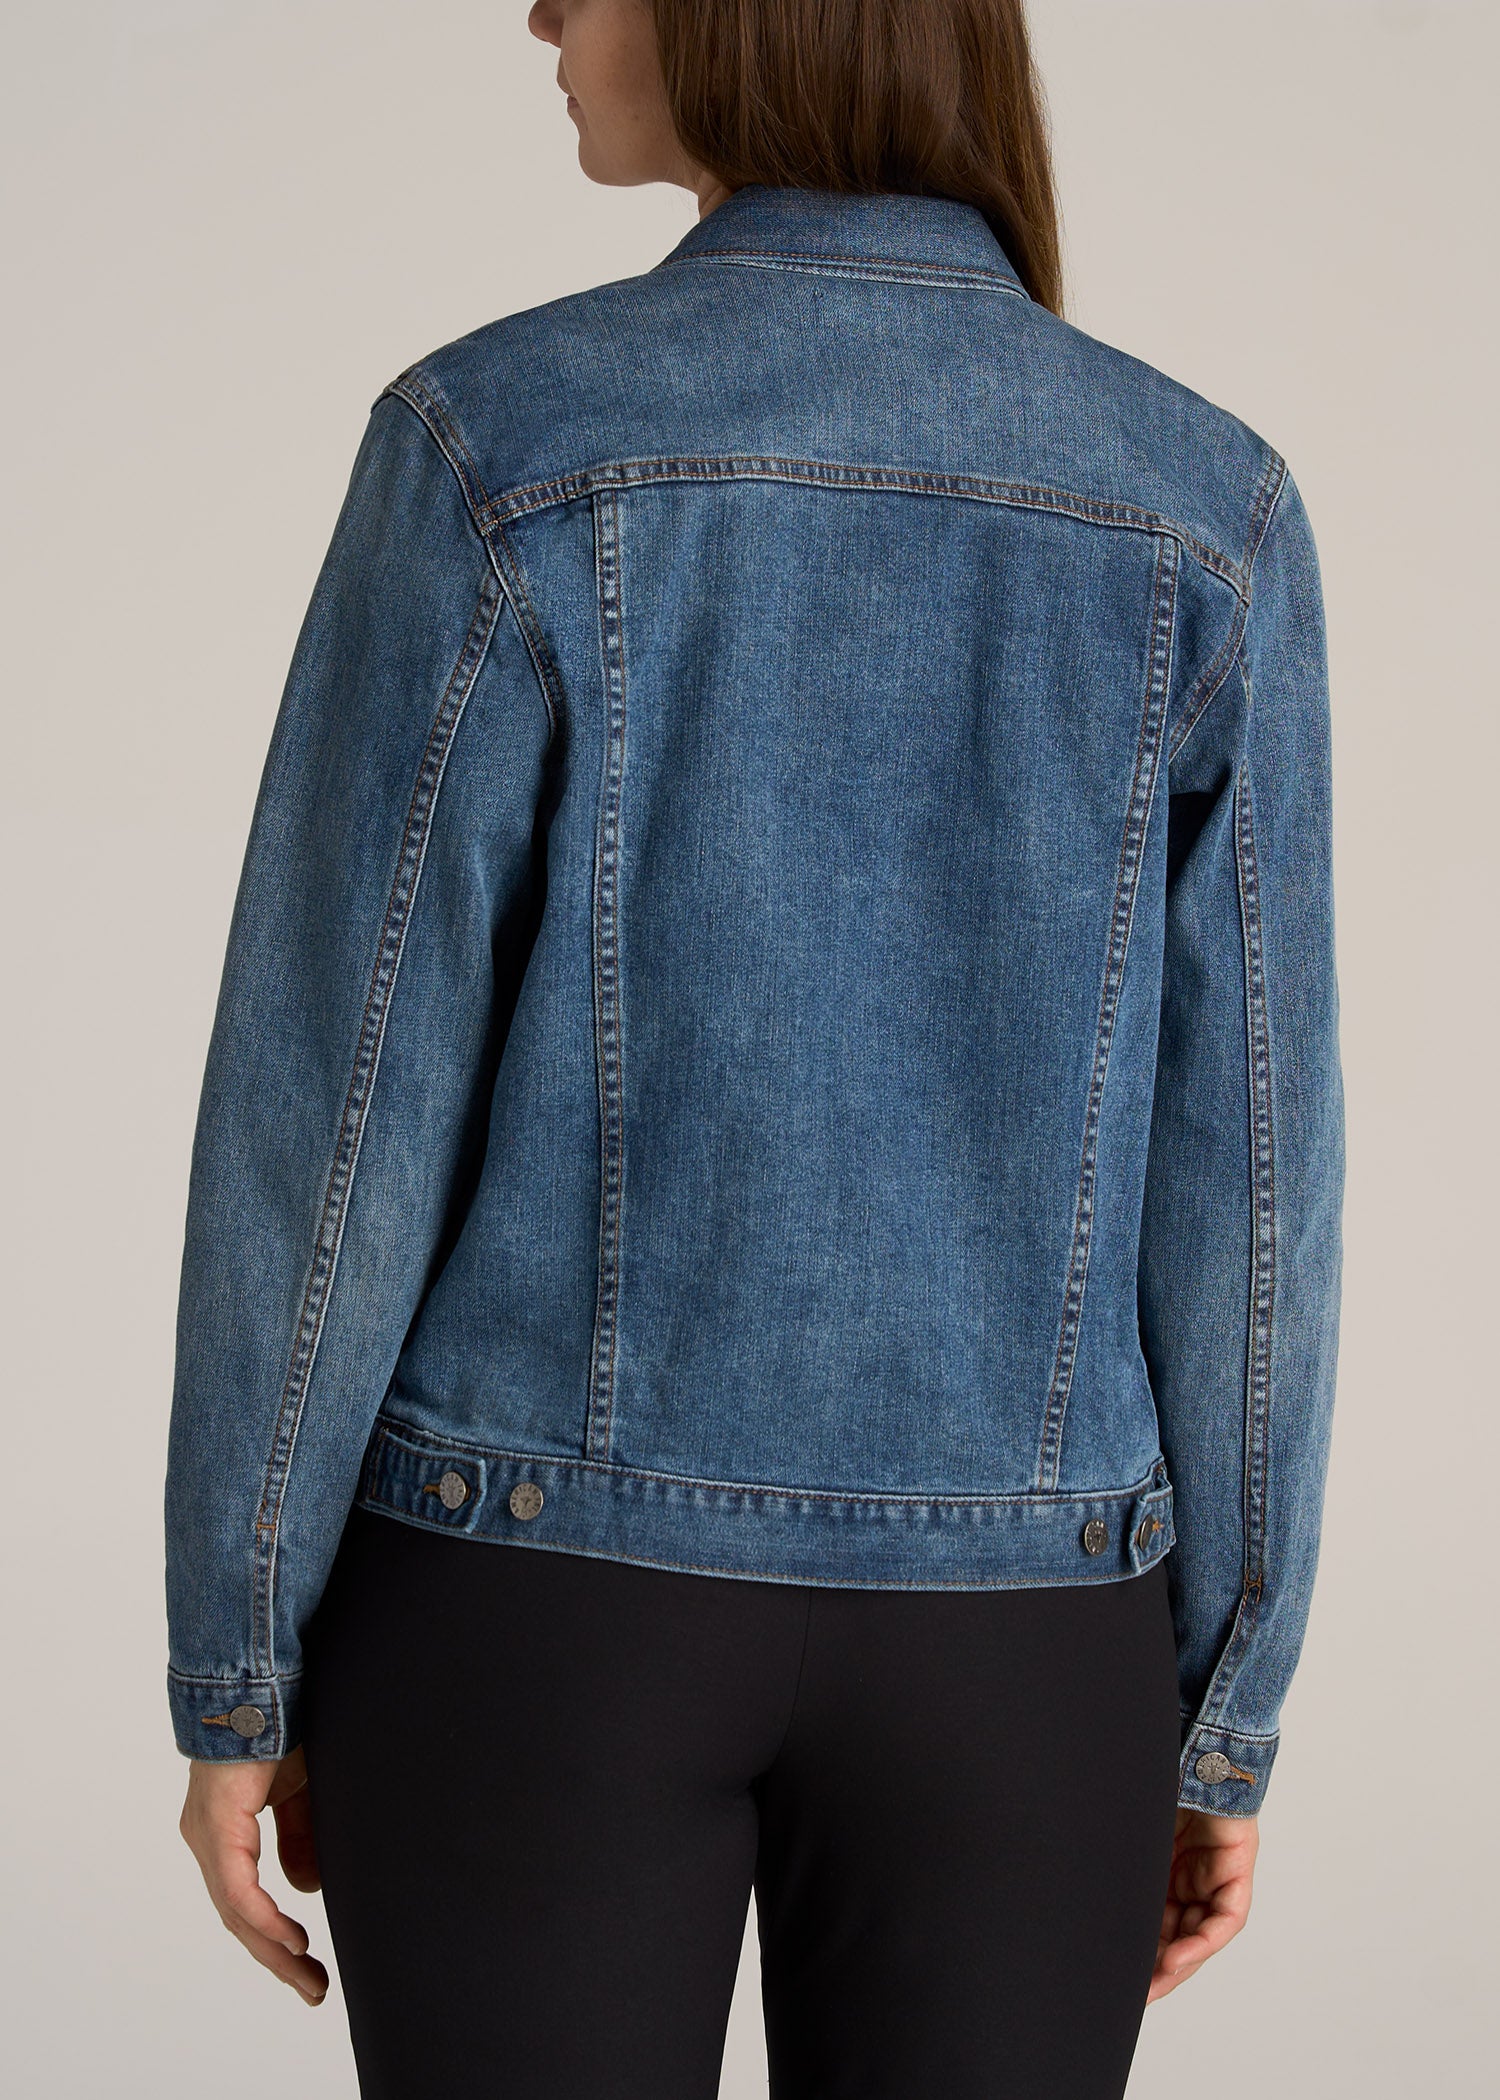 Jacket D&G Blue size XS International in Denim - Jeans - 41737222